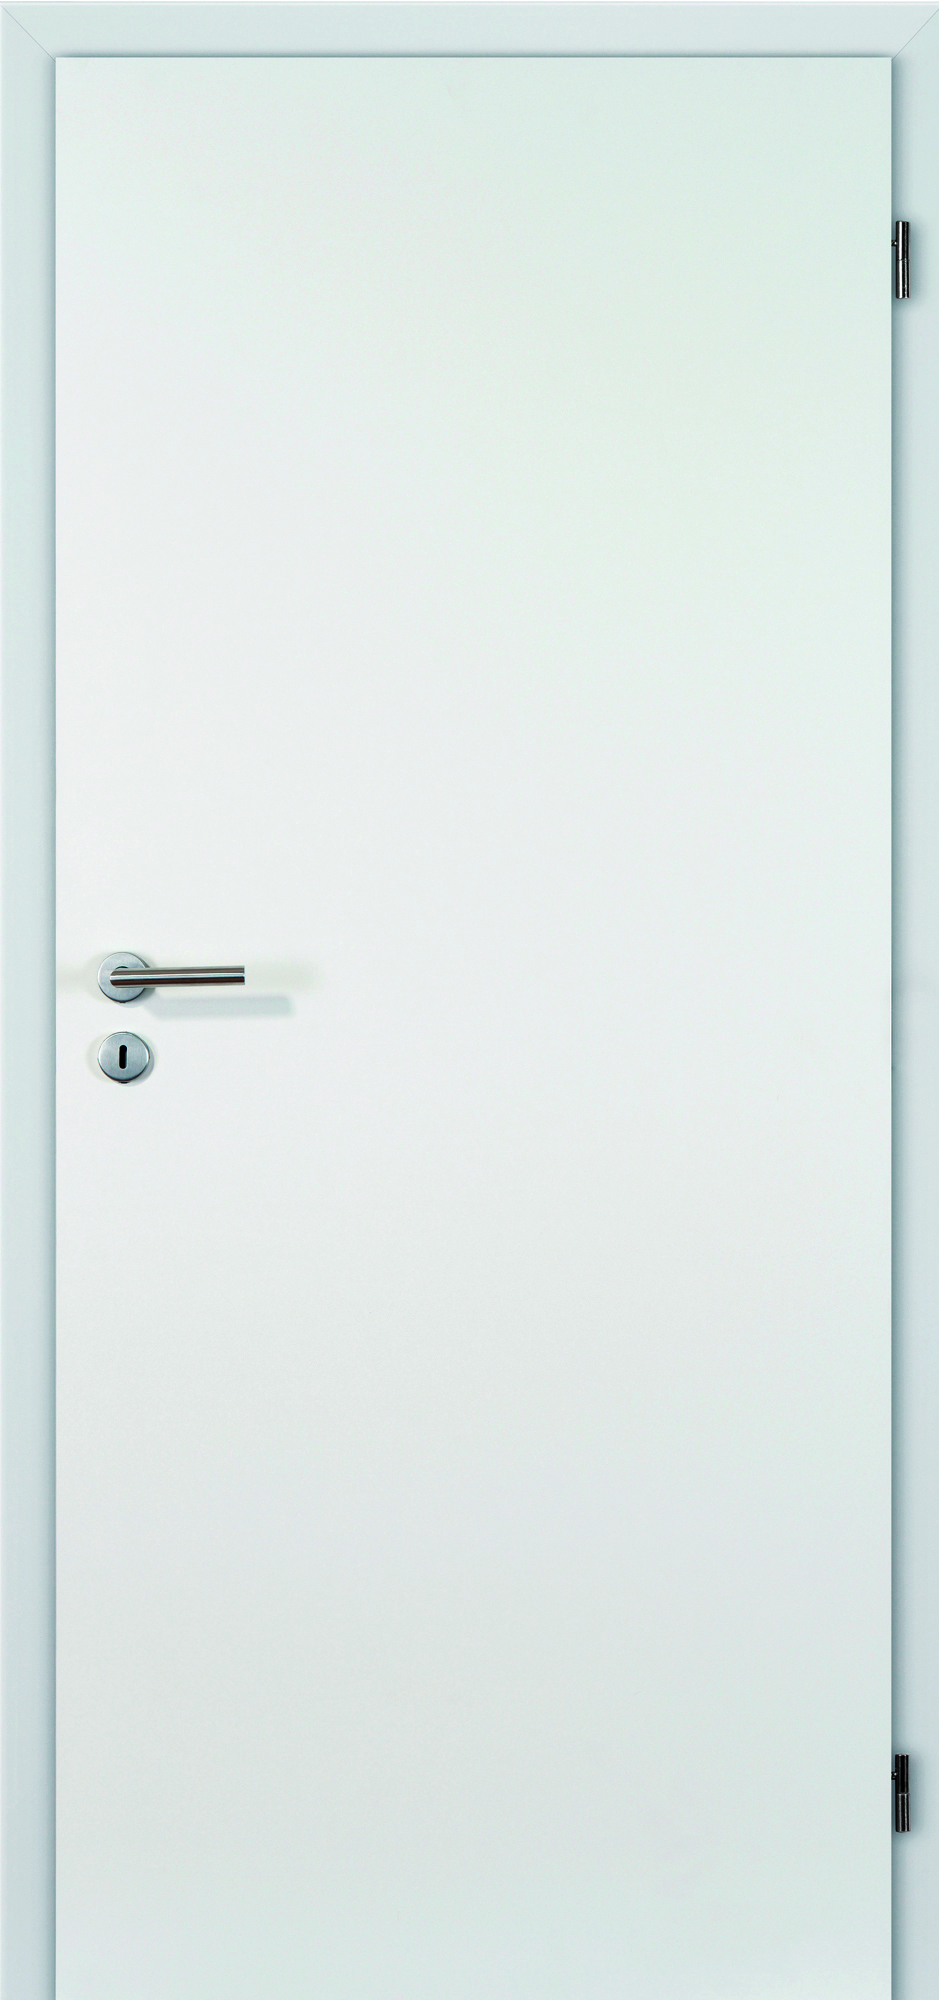 Dveře interiérové Doornite BIANKA DTD bílý lak levá 900 mm